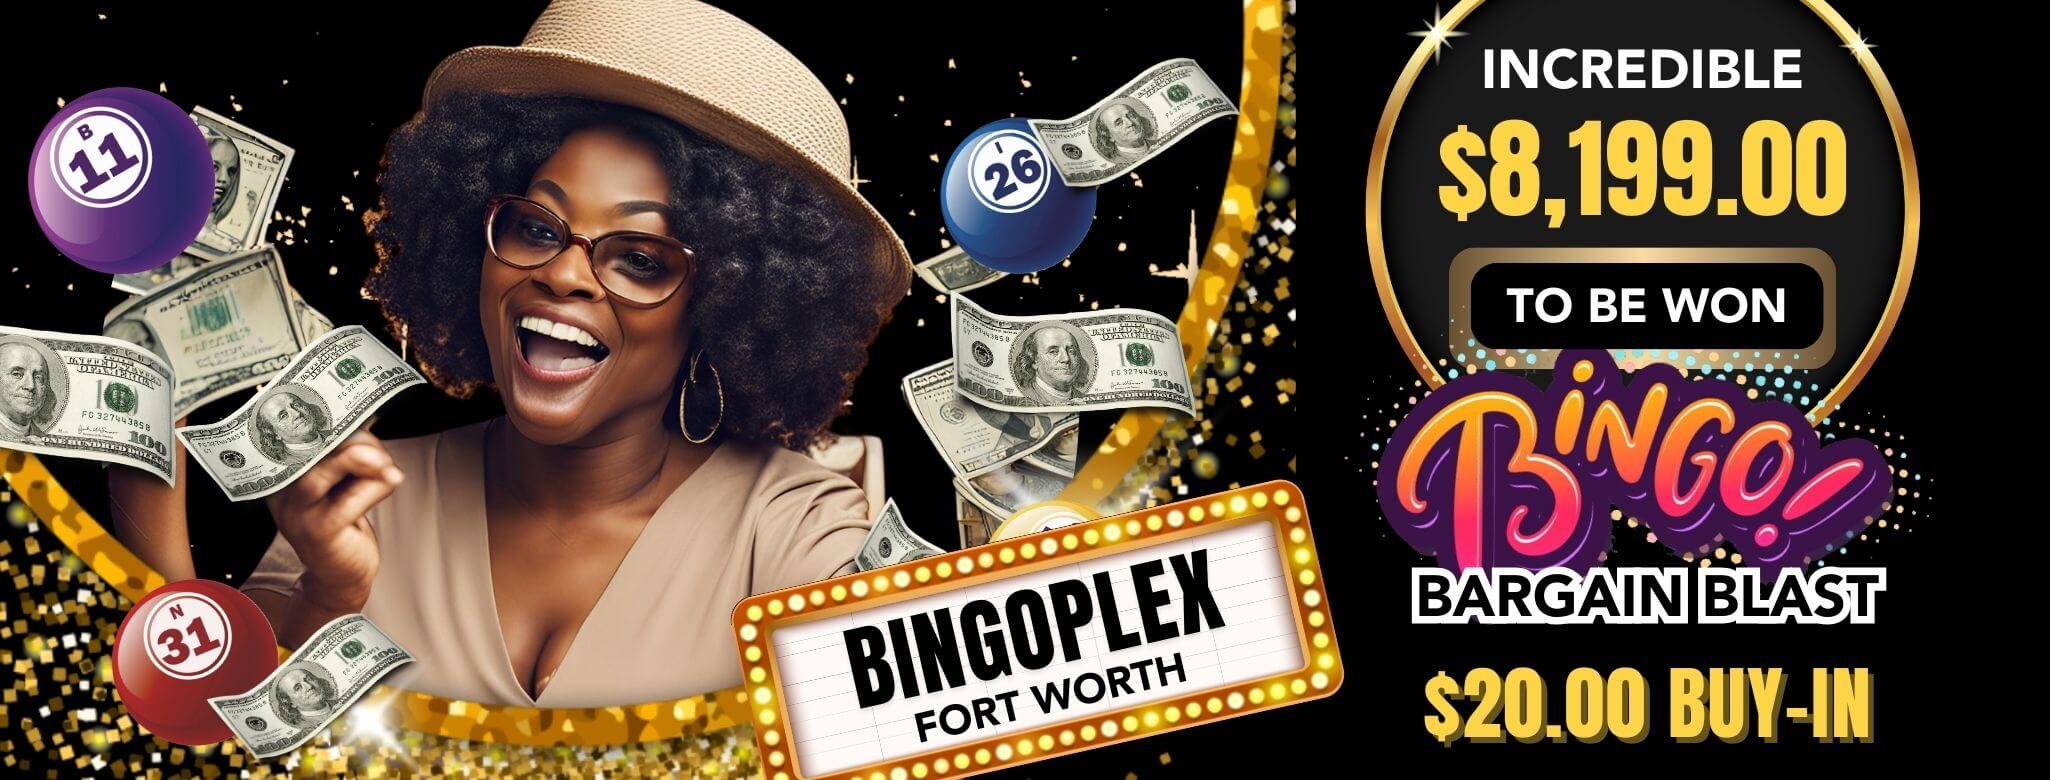 BingoPlex Bingo Bargain Blast